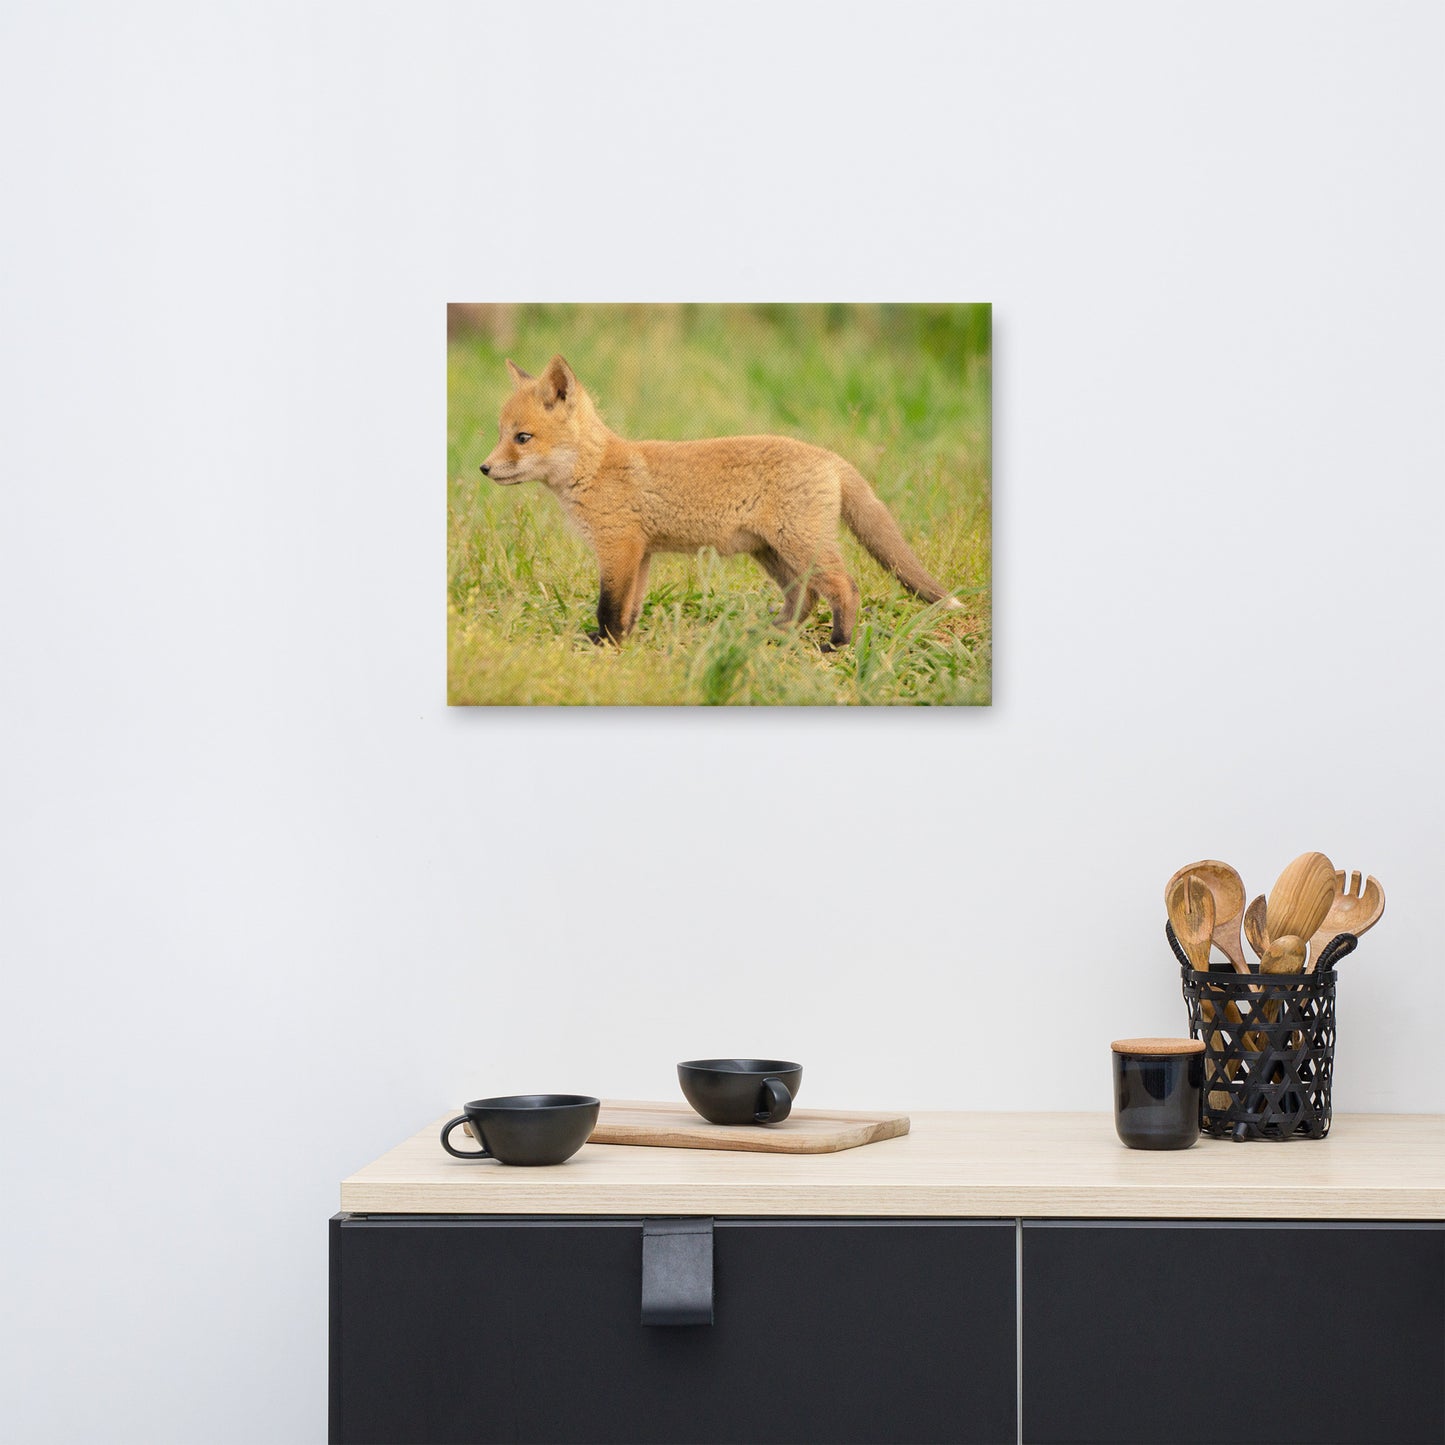 Sophisticated Nursery Art: Fox Pup In Meadow - Wildlife / Animal / Nature Photograph Canvas Wall Art Print - Artwork - Wall Decor